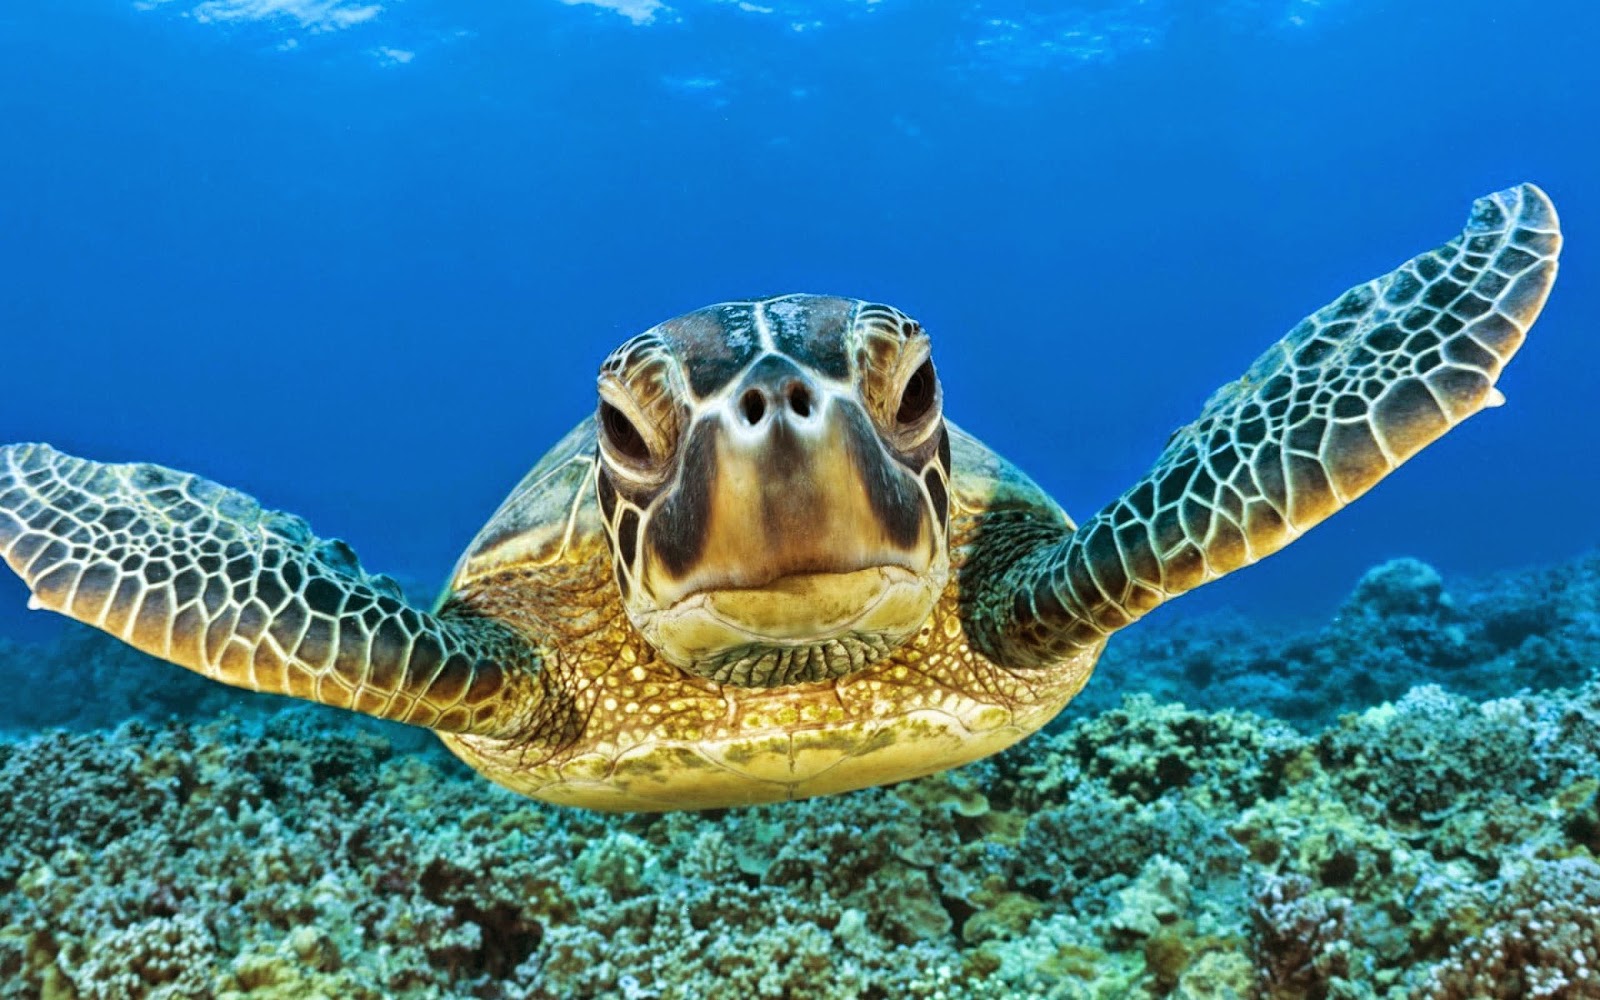 carta da parati tartaruga marina,tartaruga di mare,tartaruga di mare,tartaruga marina ridley verde oliva,tartaruga marina,biologia marina